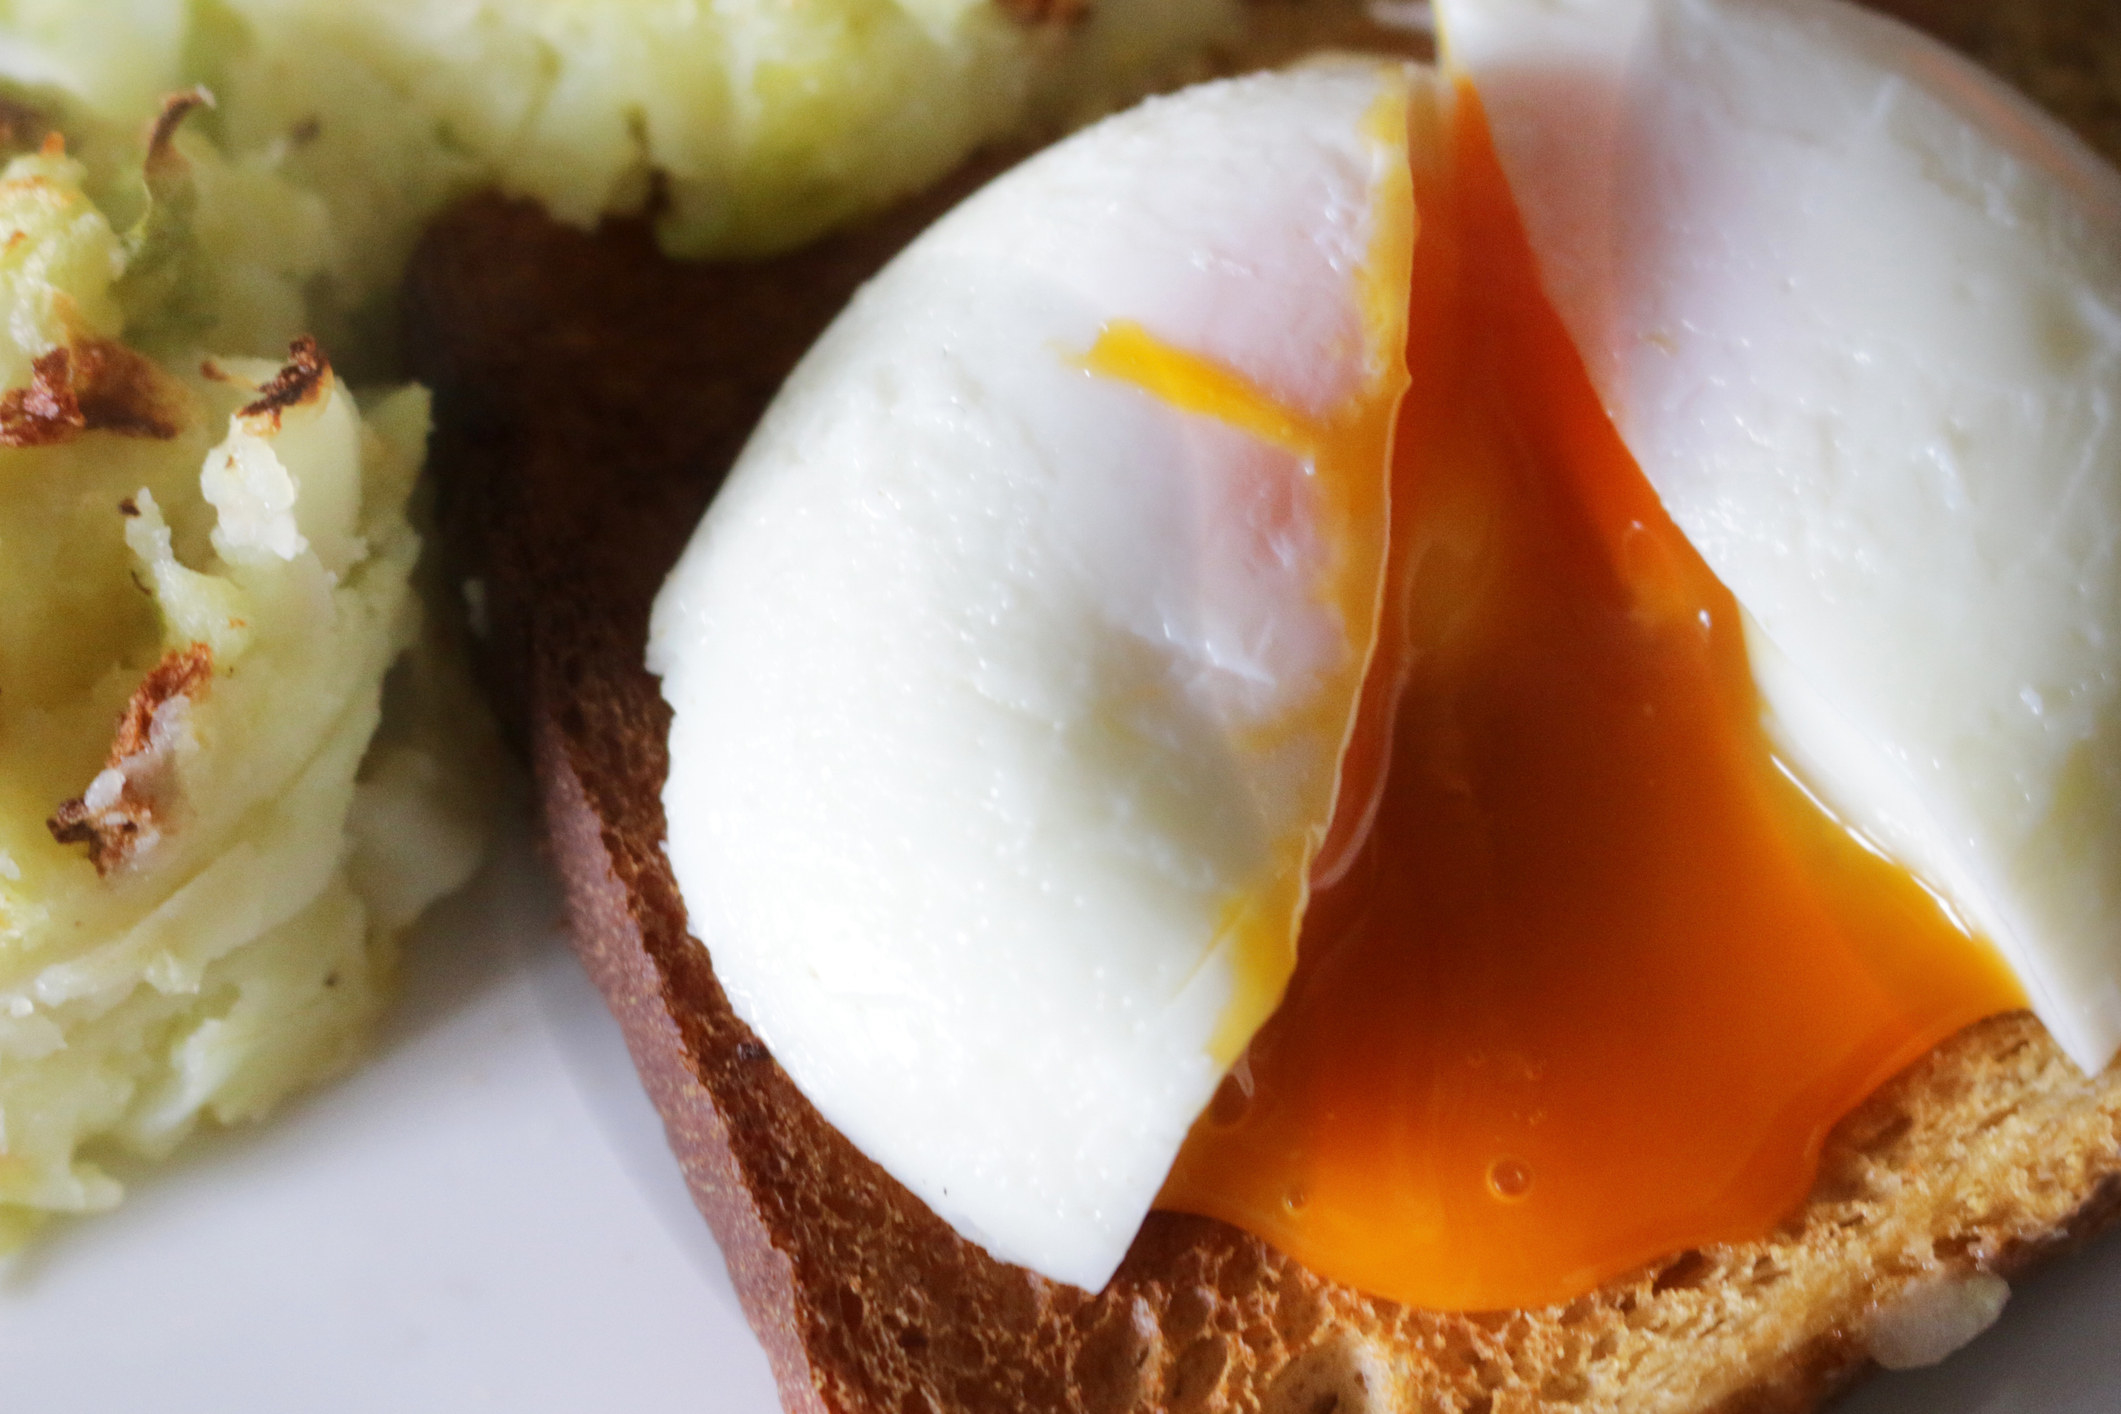 A soft-boiled egg on toast